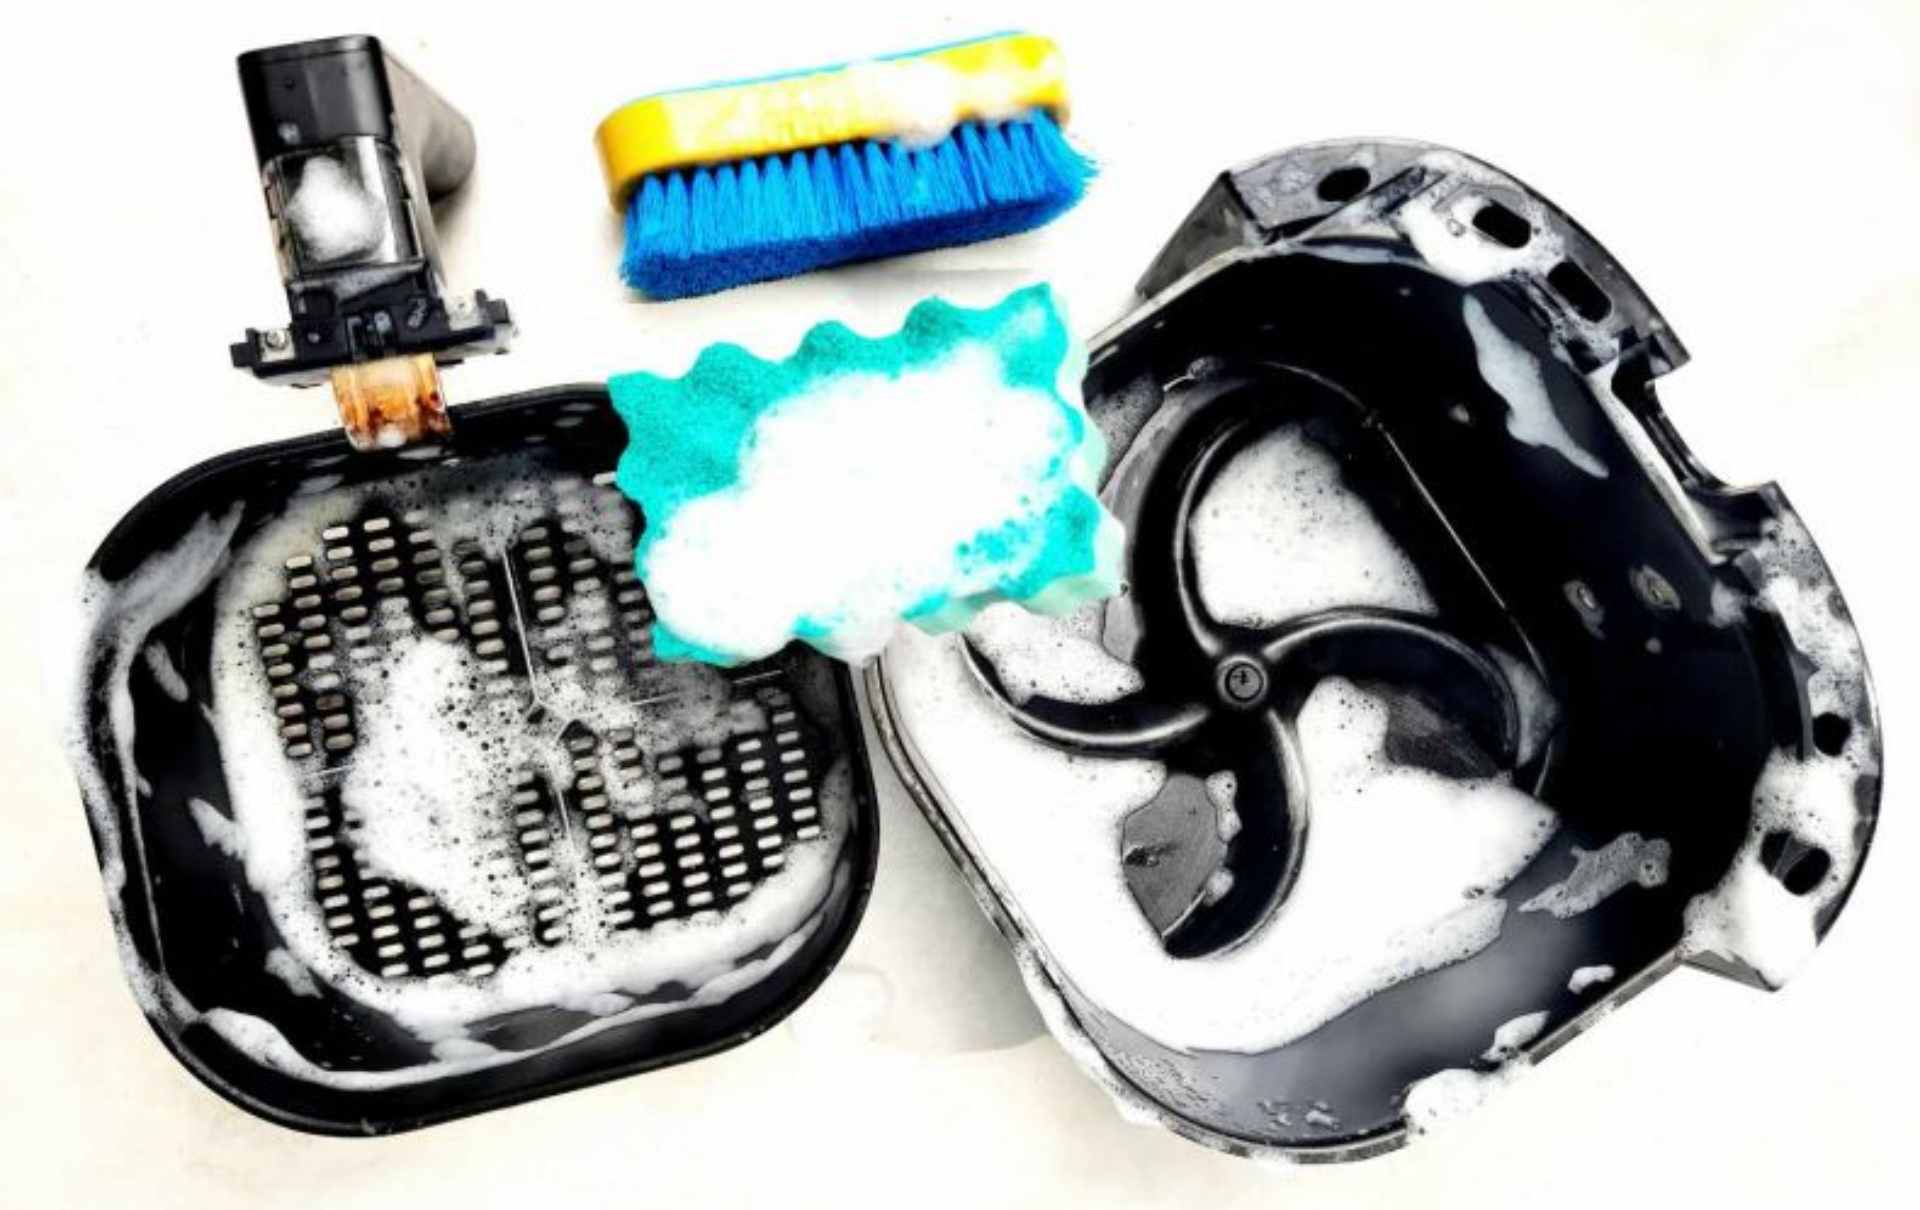 Como limpar a Airfryer corretamente sem danificar - Foto: Getty Images, iStock